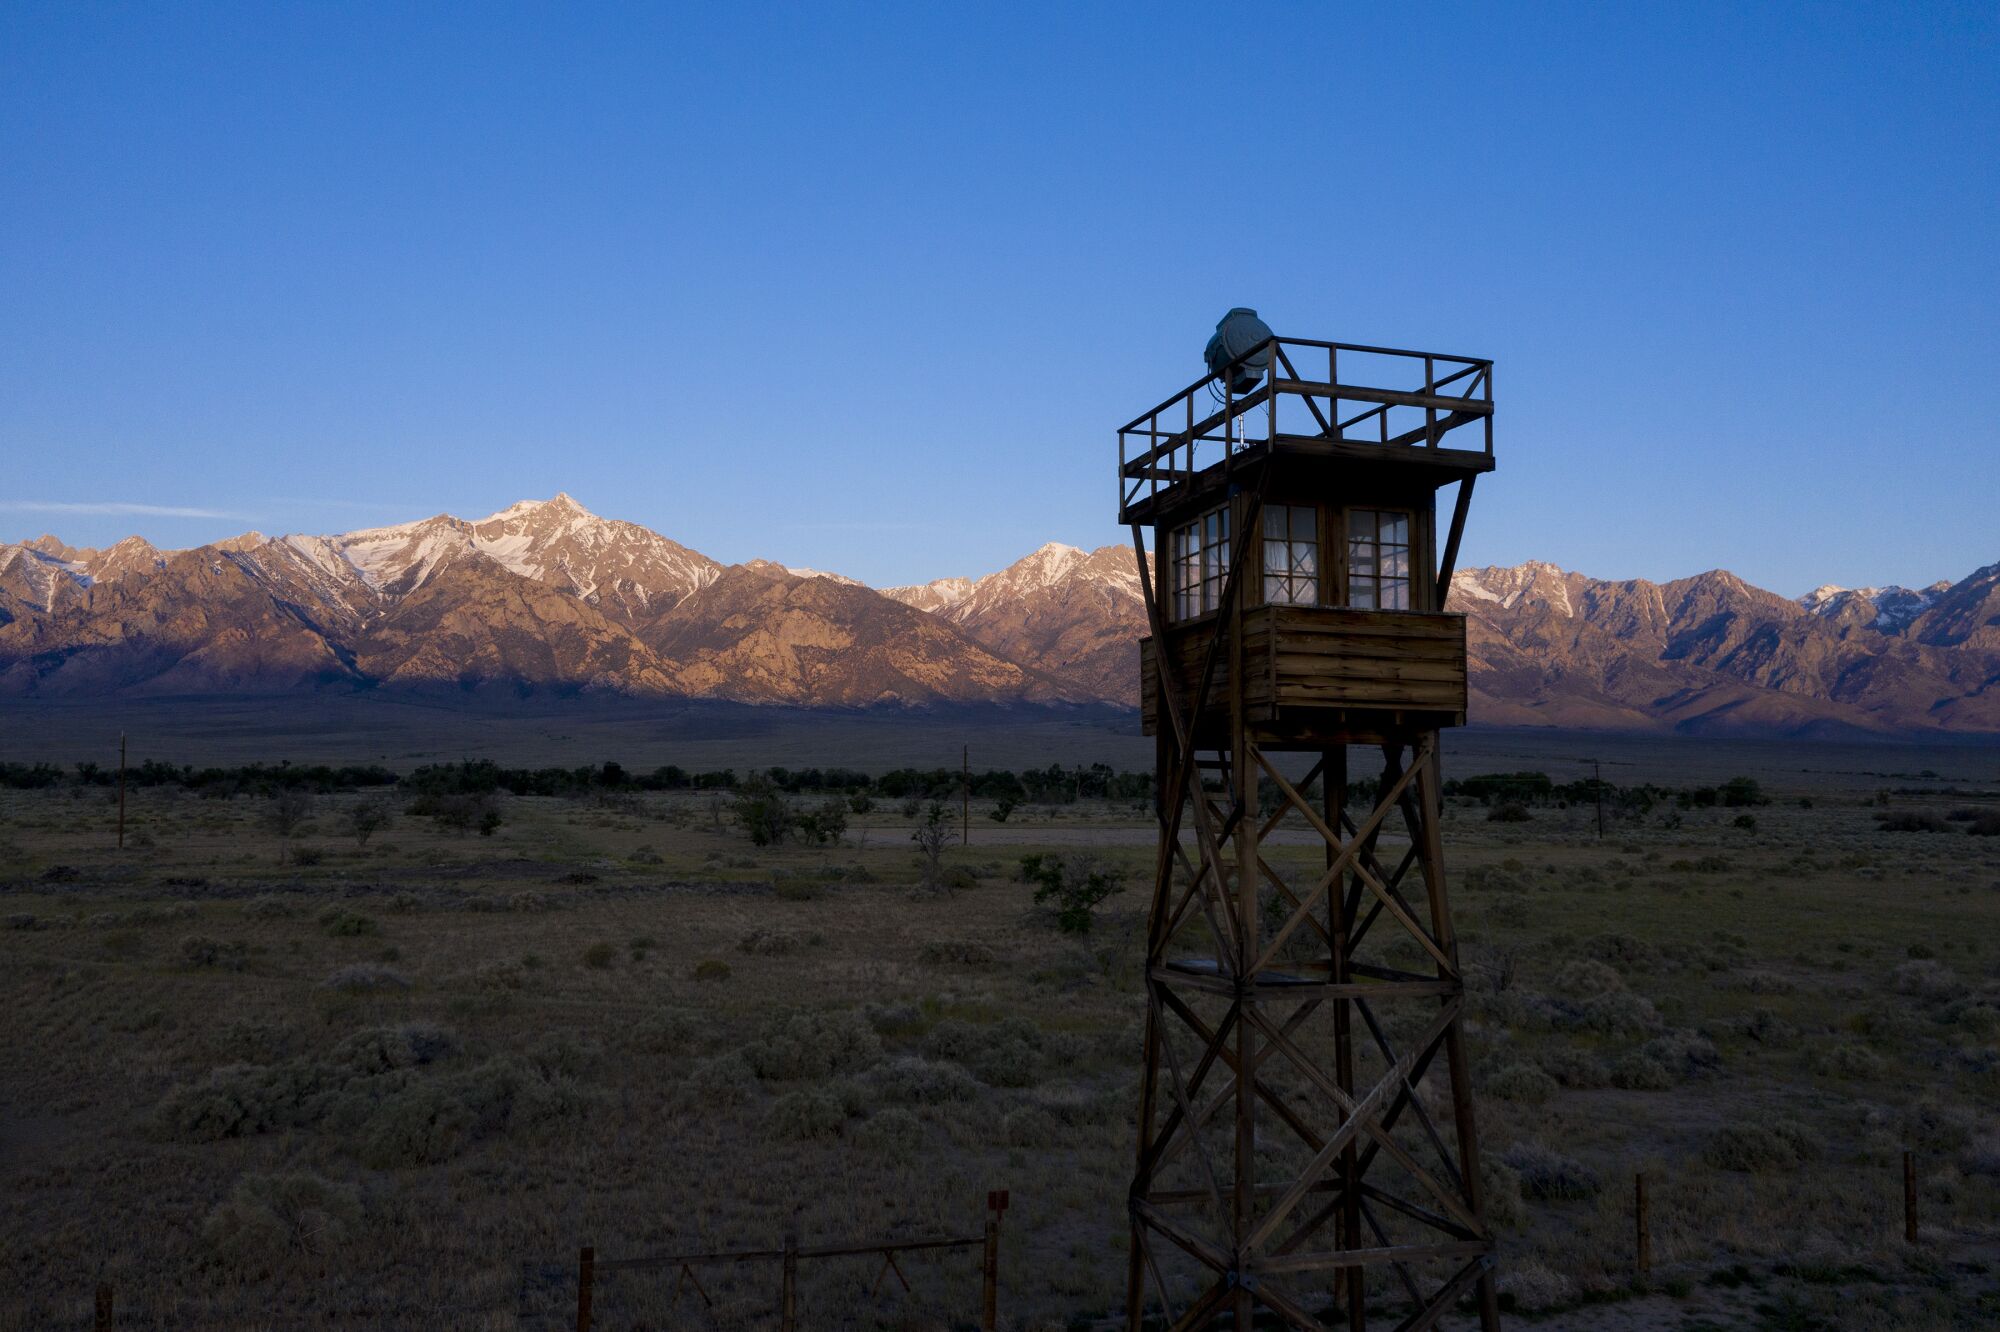 The rising sun illuminates the Sierra Nevada crest behind a restored guard tower at the Manzanar National Historic Site.